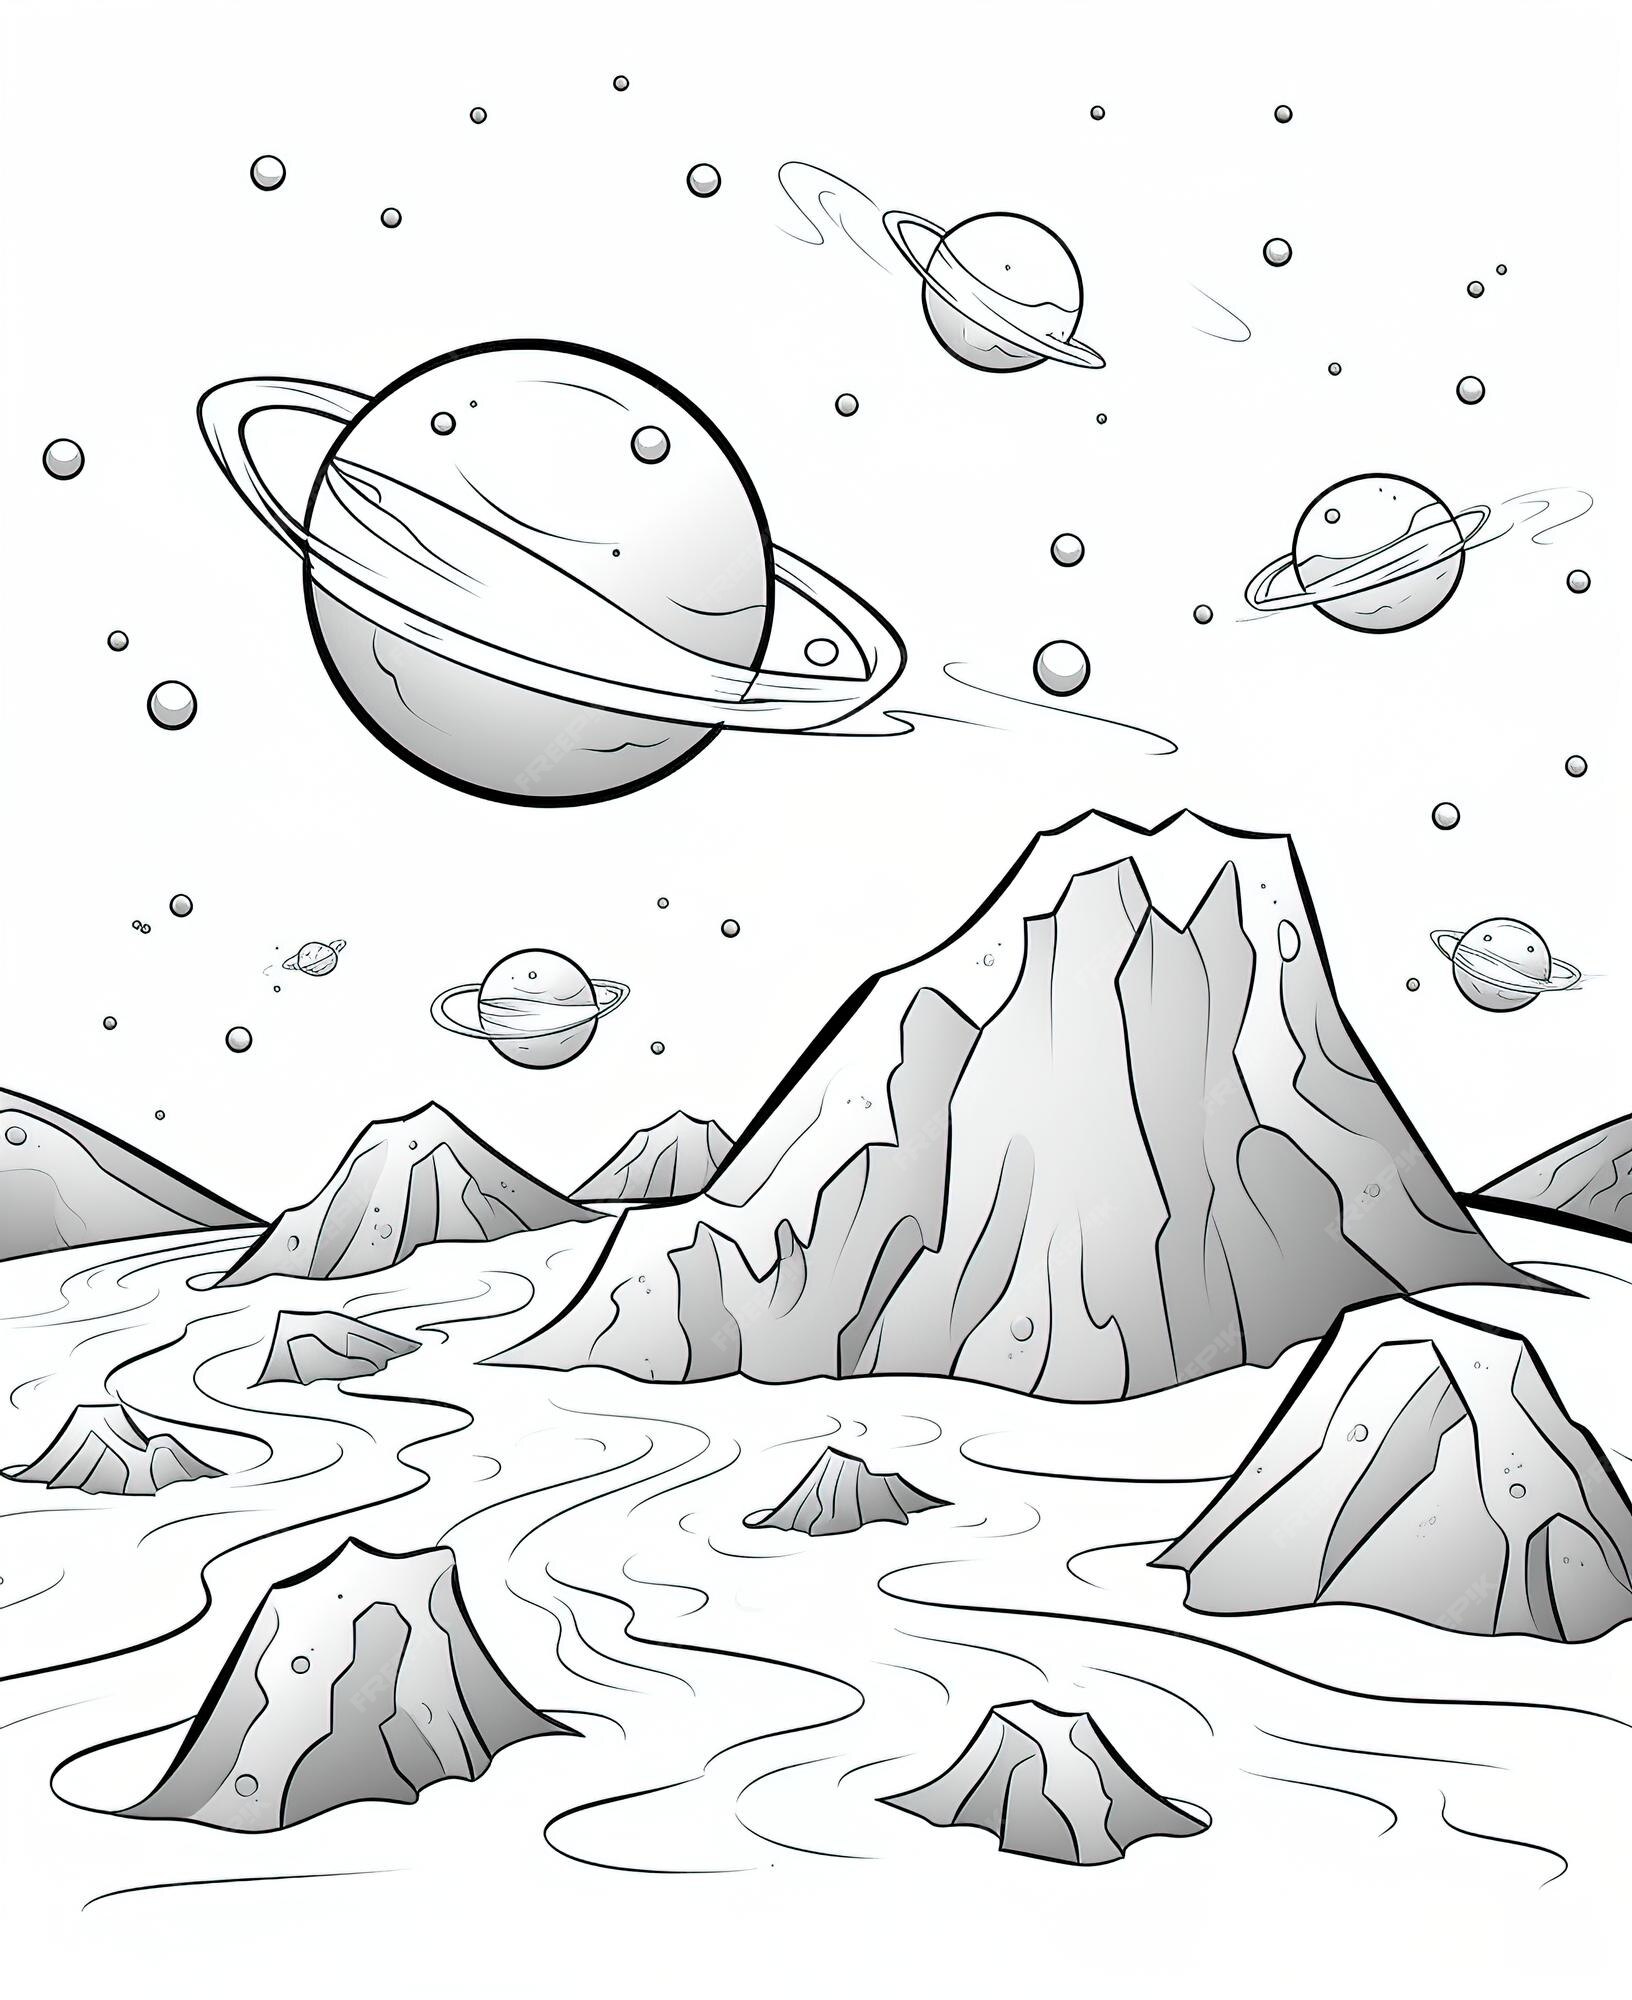 Dibujo de asteroid de dibujos animados delineado arte negrita vector premium